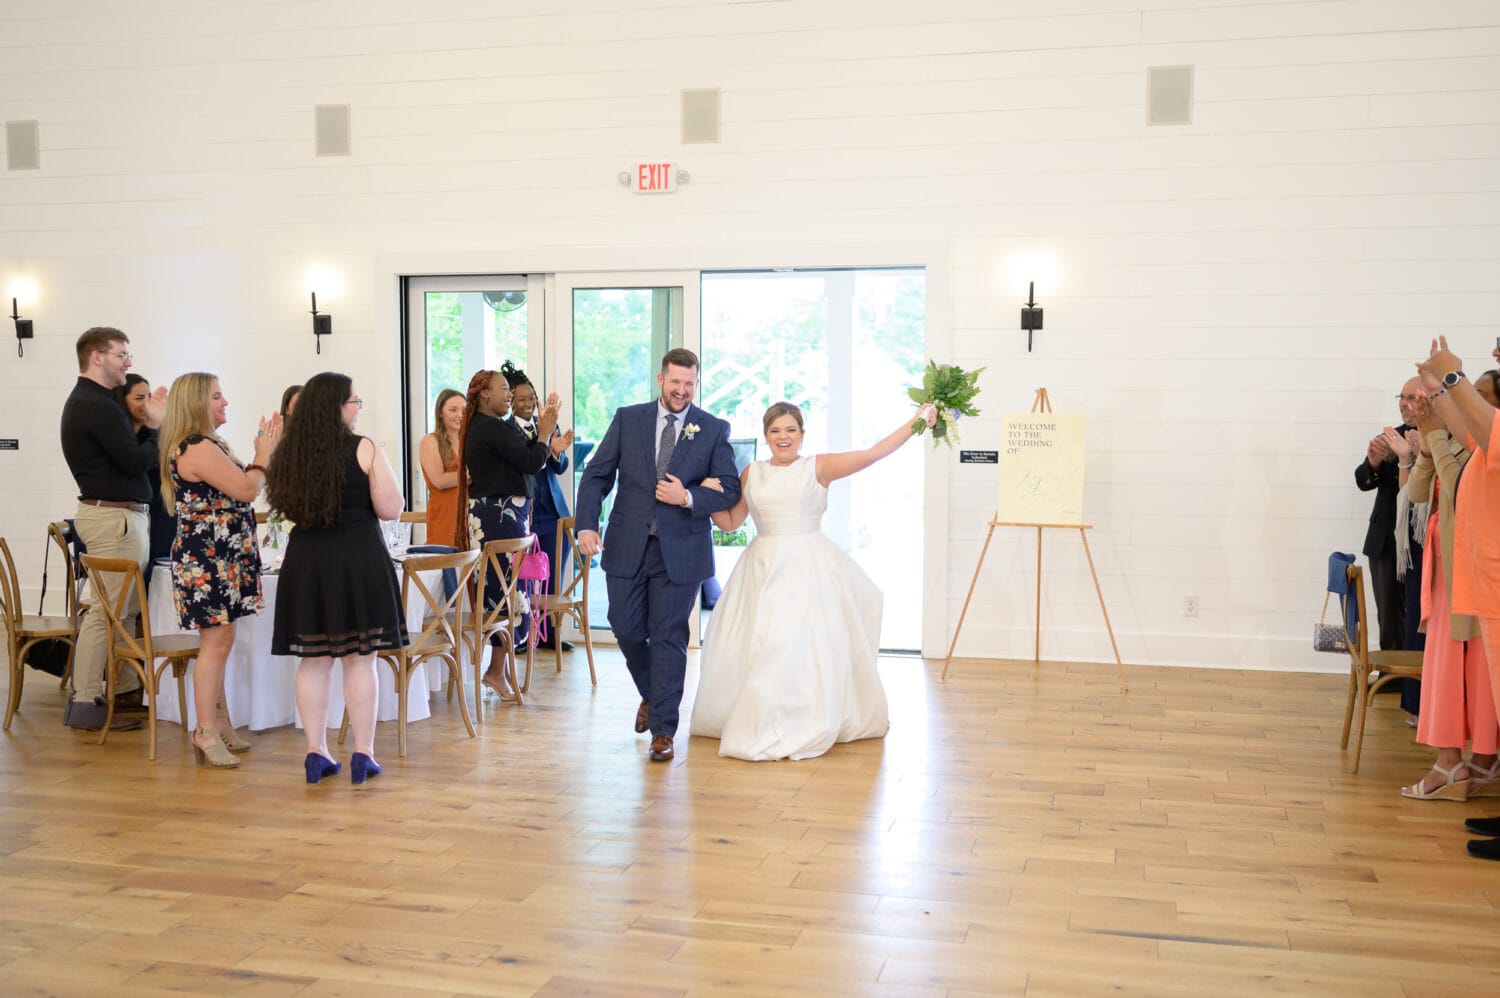 Fun wedding introductions - The Venue at White Oaks Farm